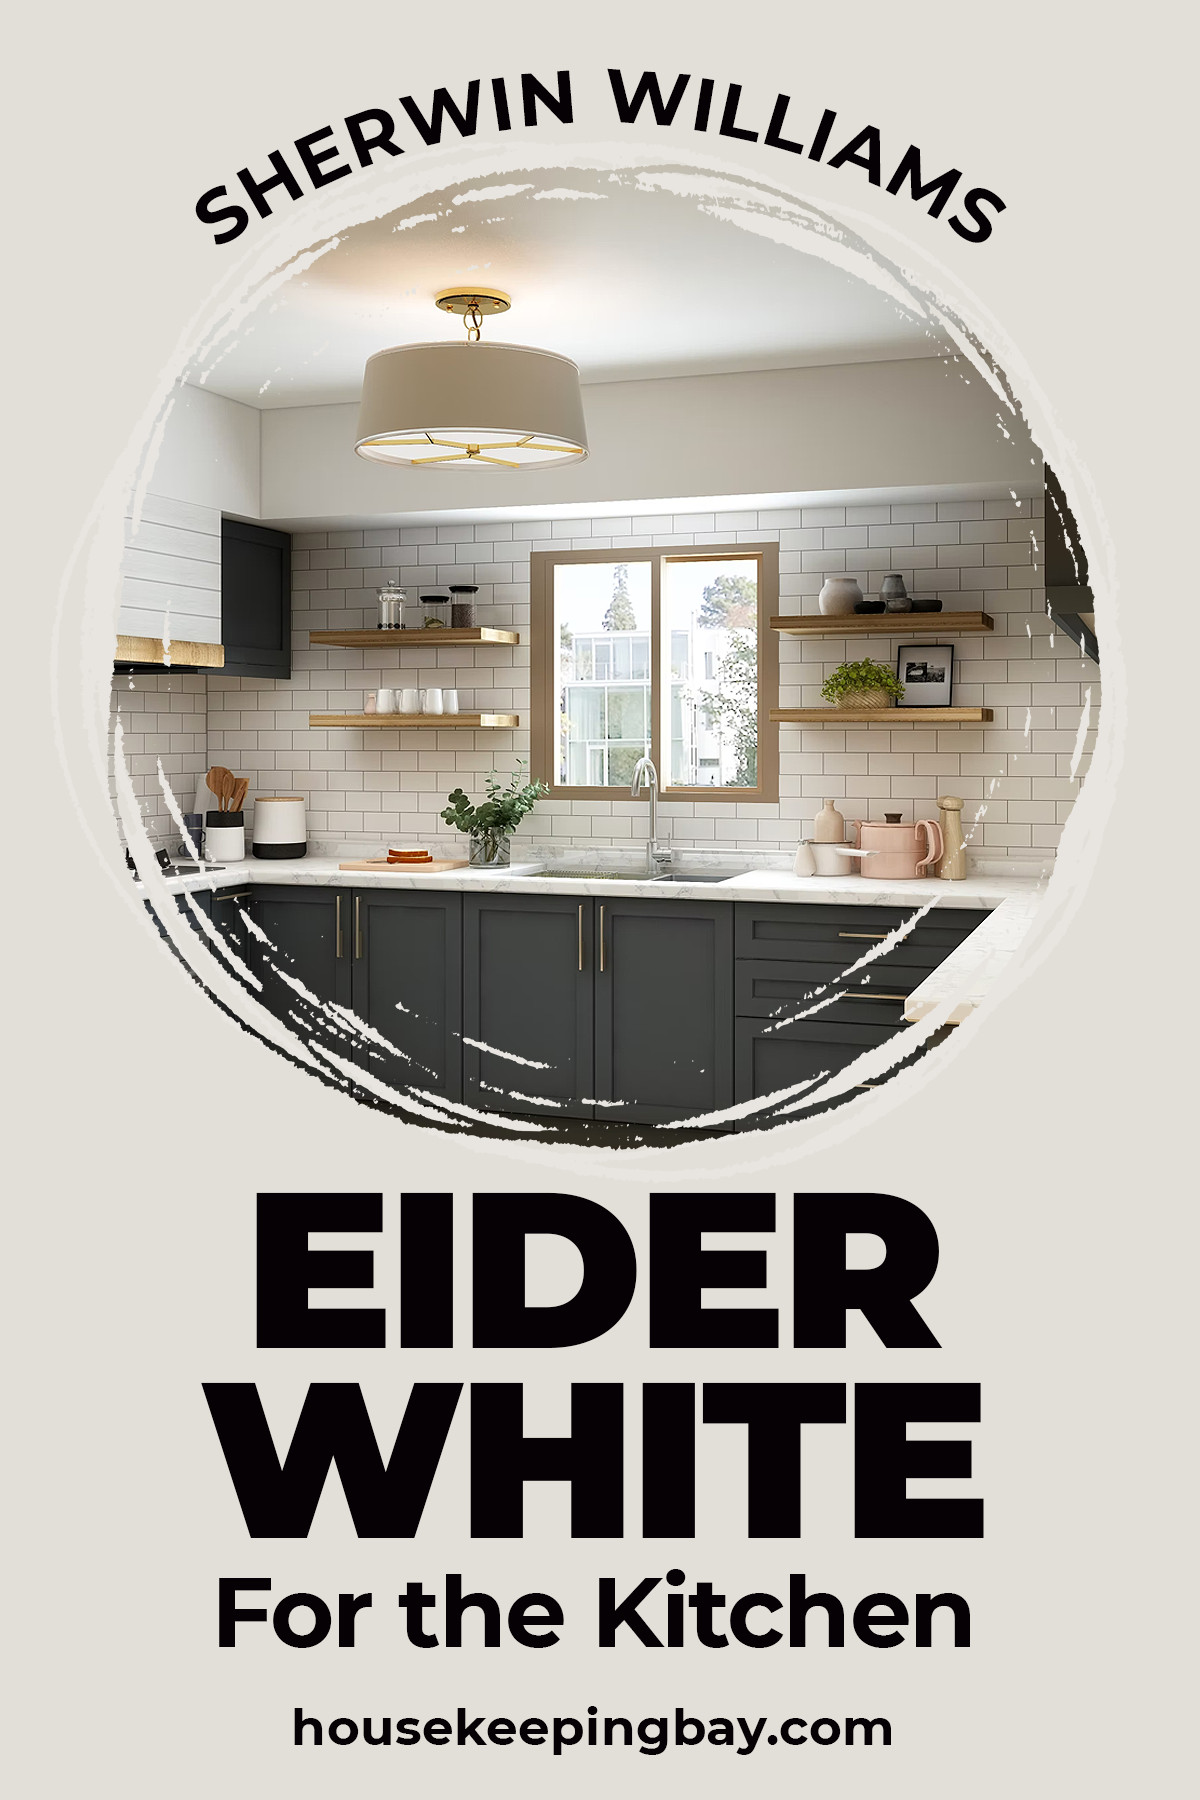 Sherwin Williams Eider White For the kitchen